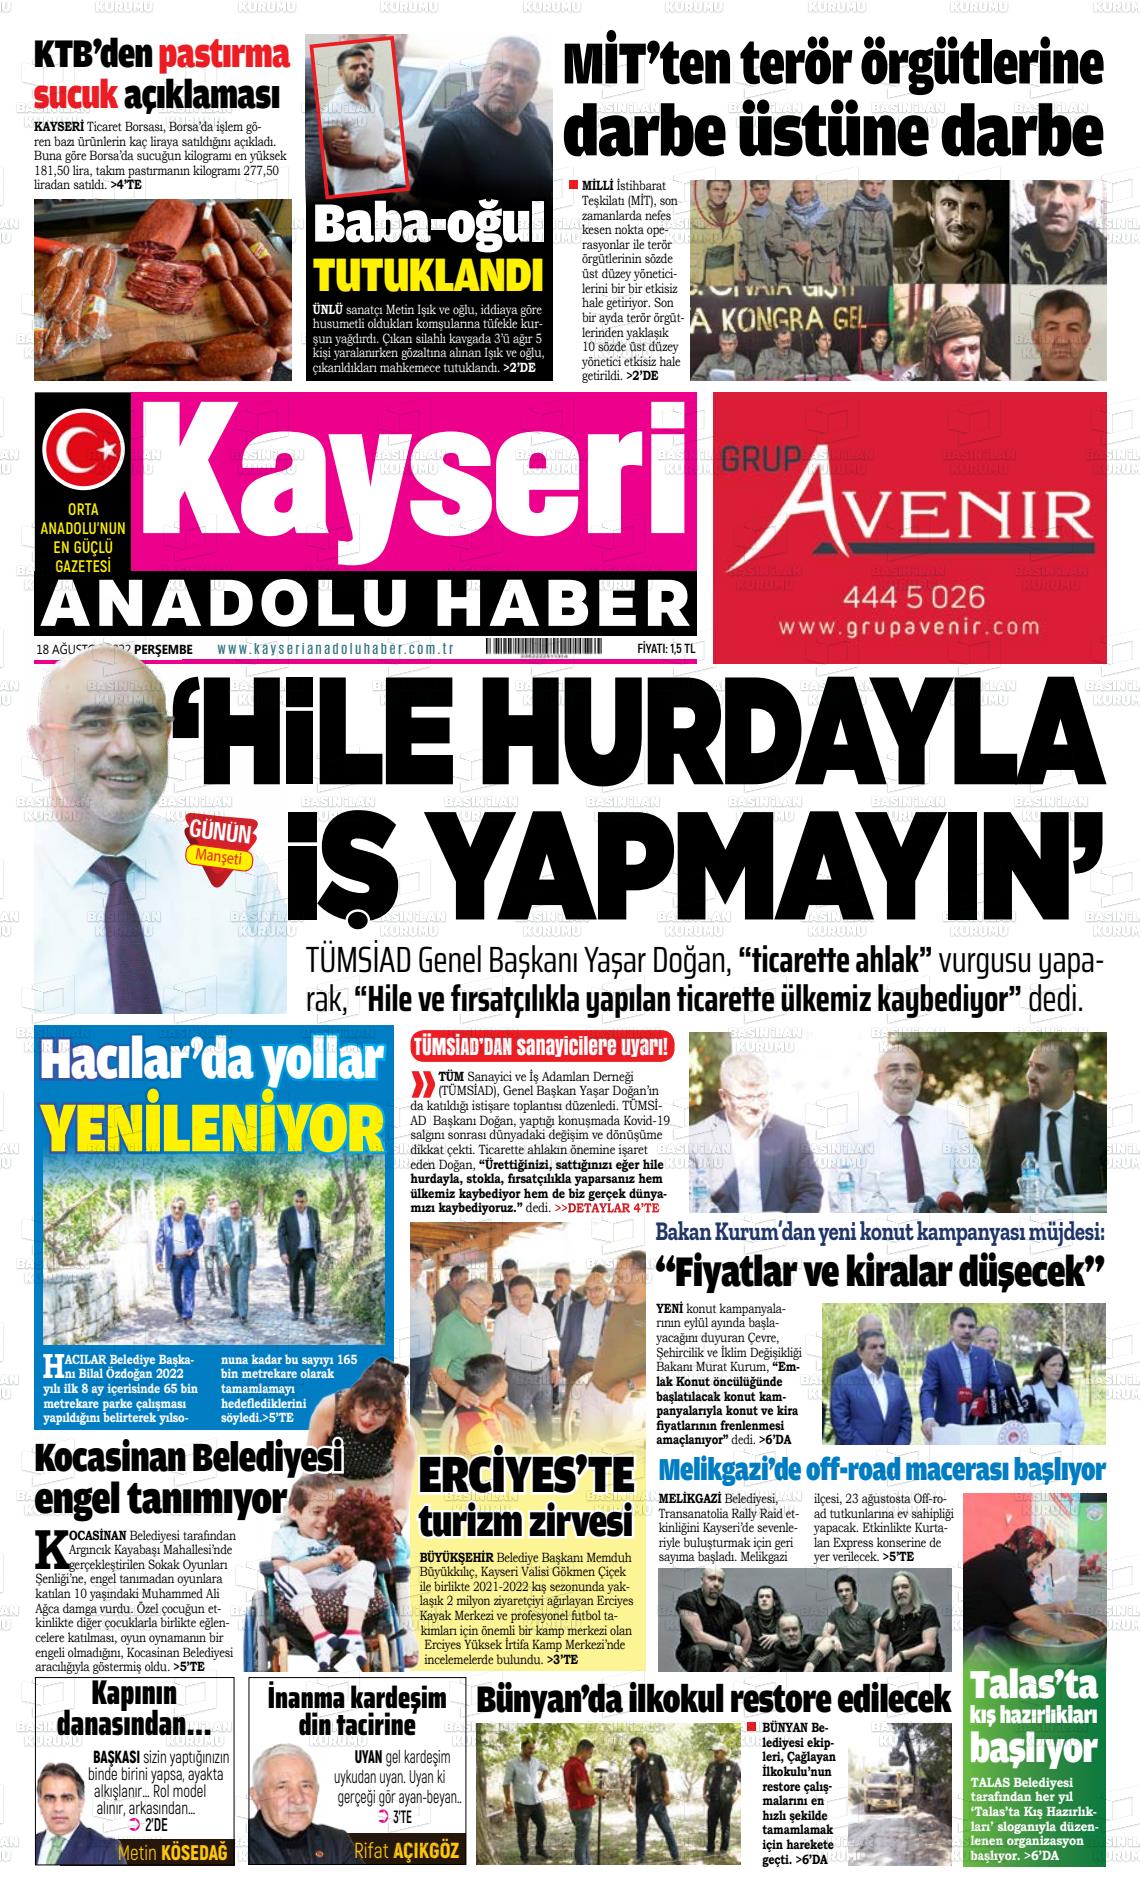 18 Ağustos 2022 Kayseri Anadolu Haber Gazete Manşeti